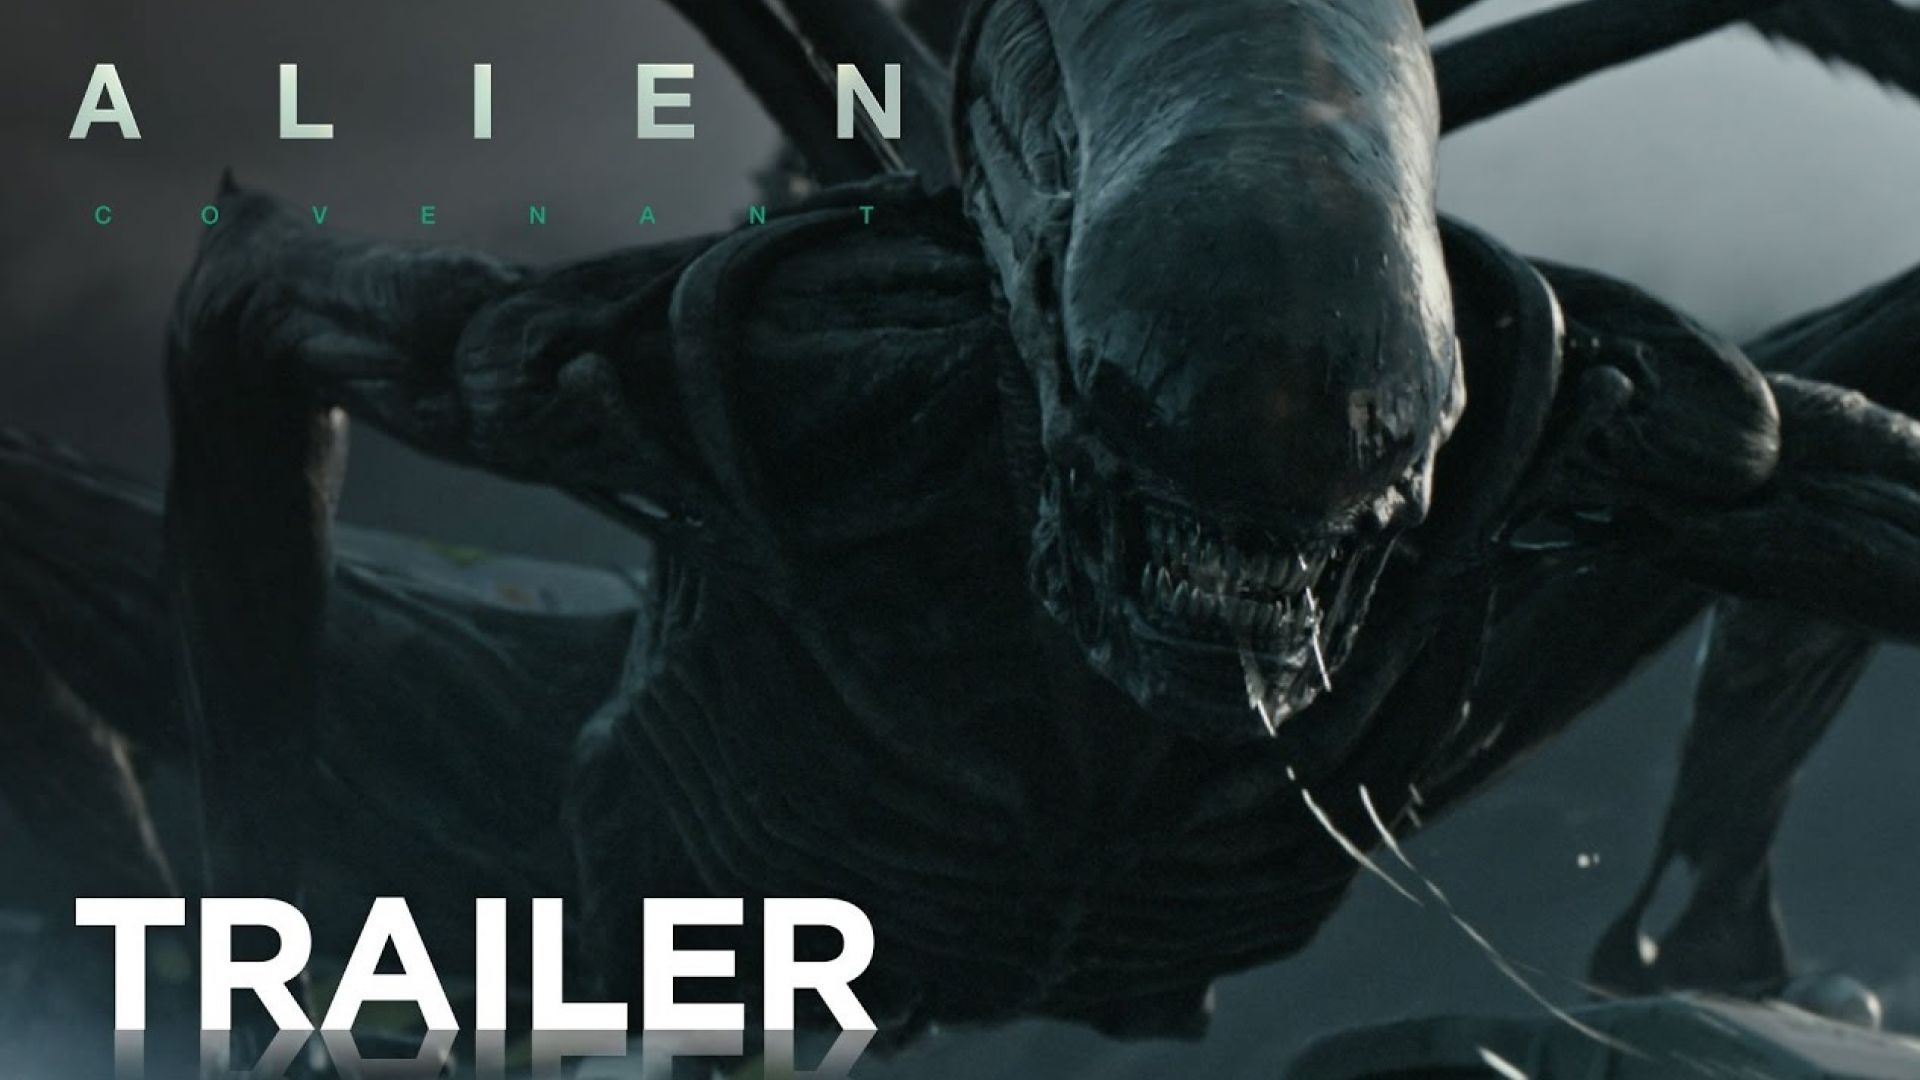 The official trailer for 'Alien: Covenant' Promises a return